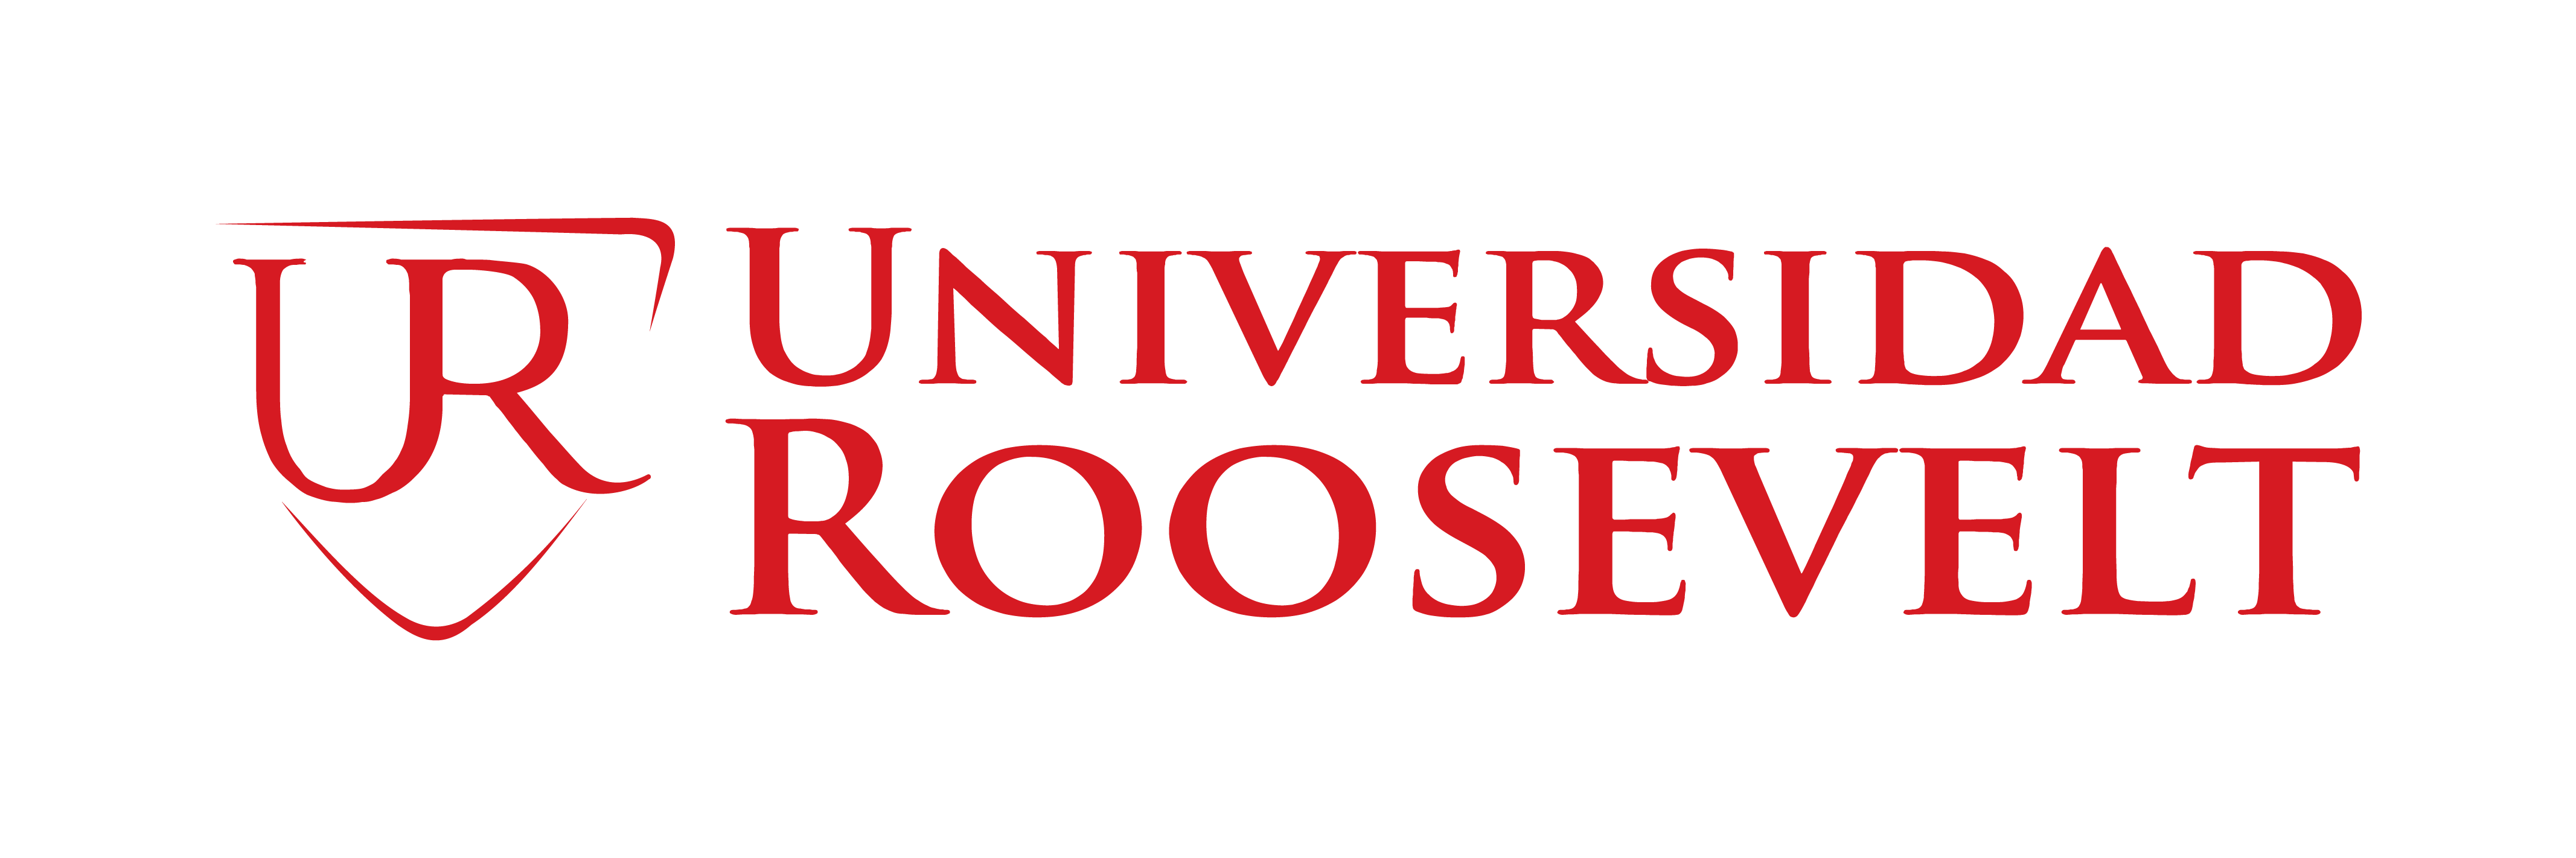 Aula Virtual - Universidad Roosevelt